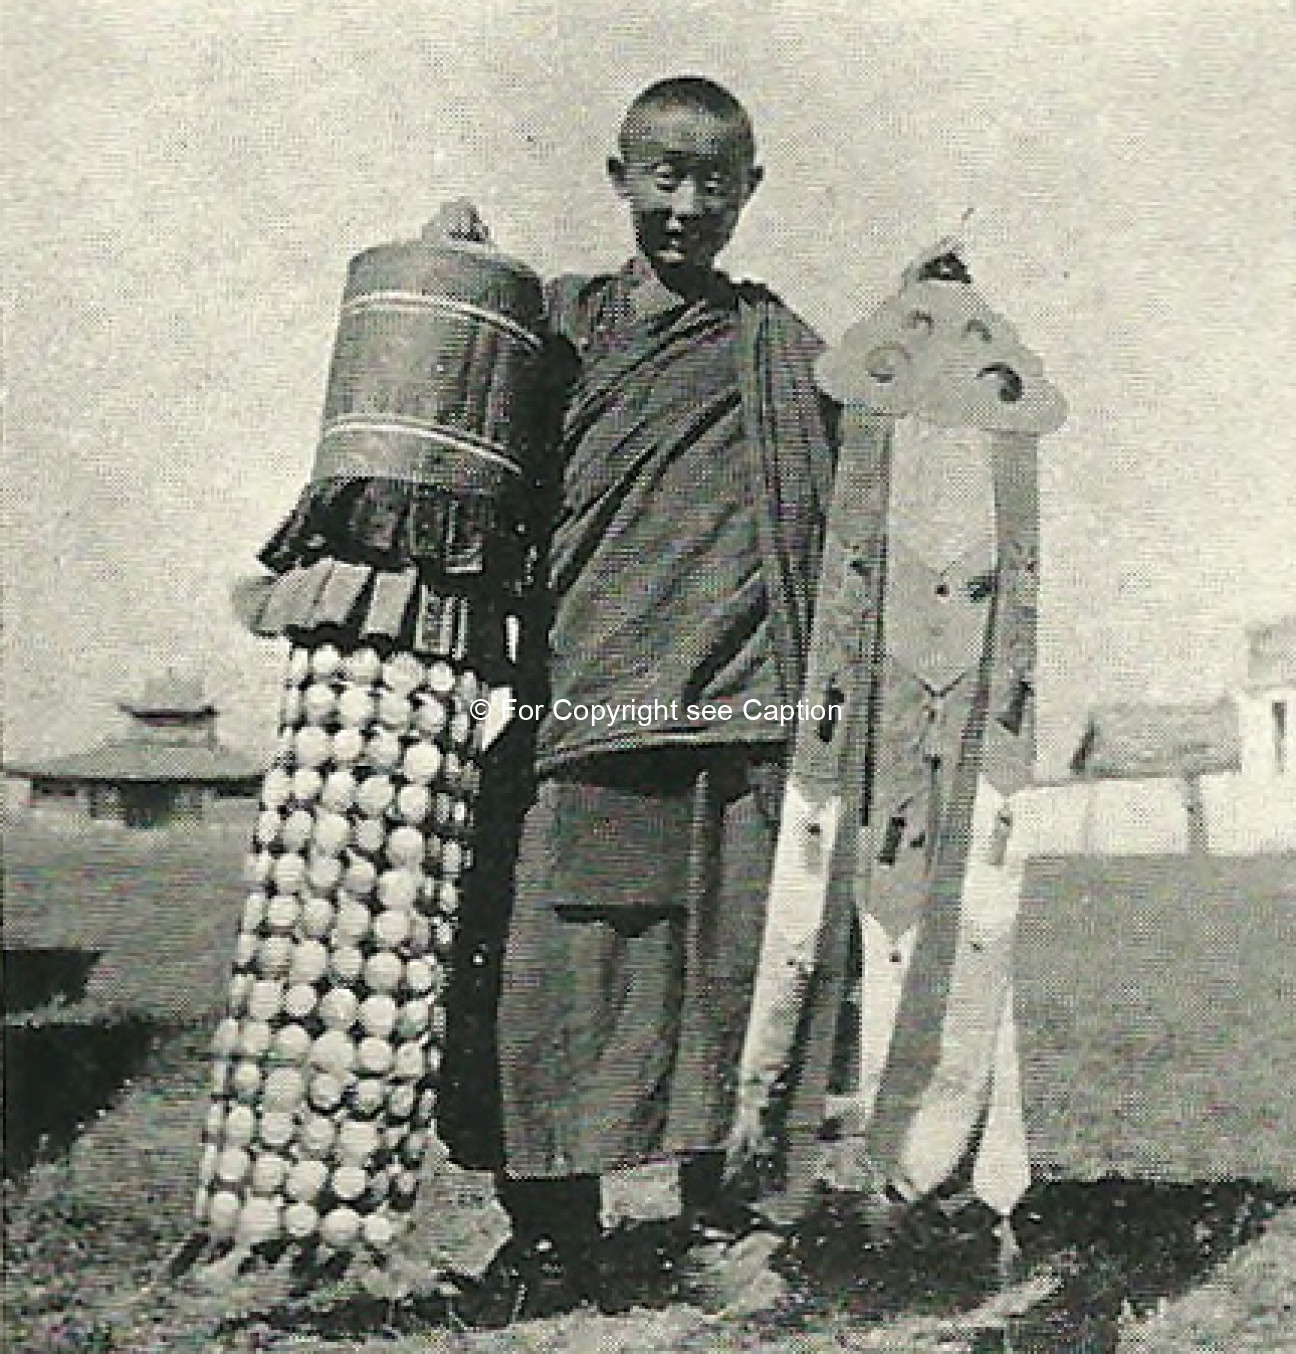 Jantsan and badan held by a gelen lama. Binsteed, G. C., 